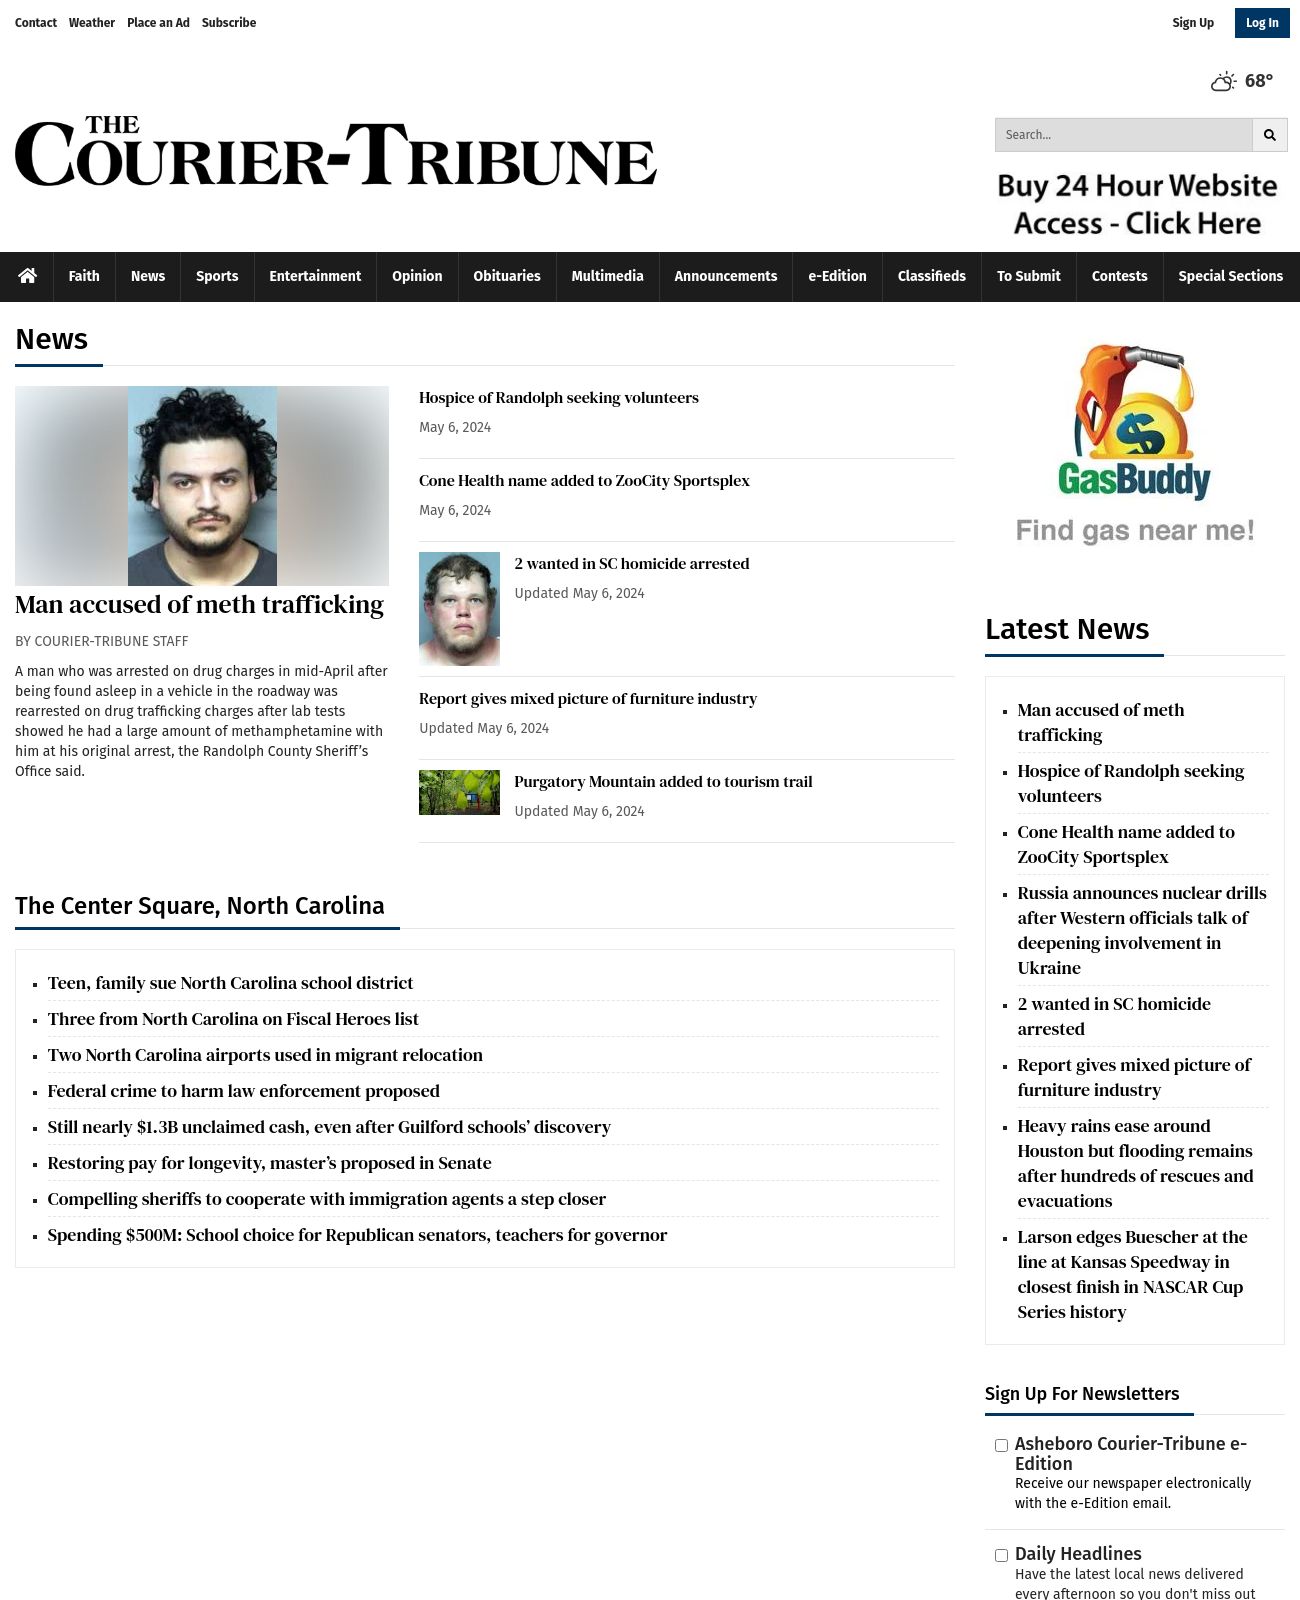 The Courier-Tribune